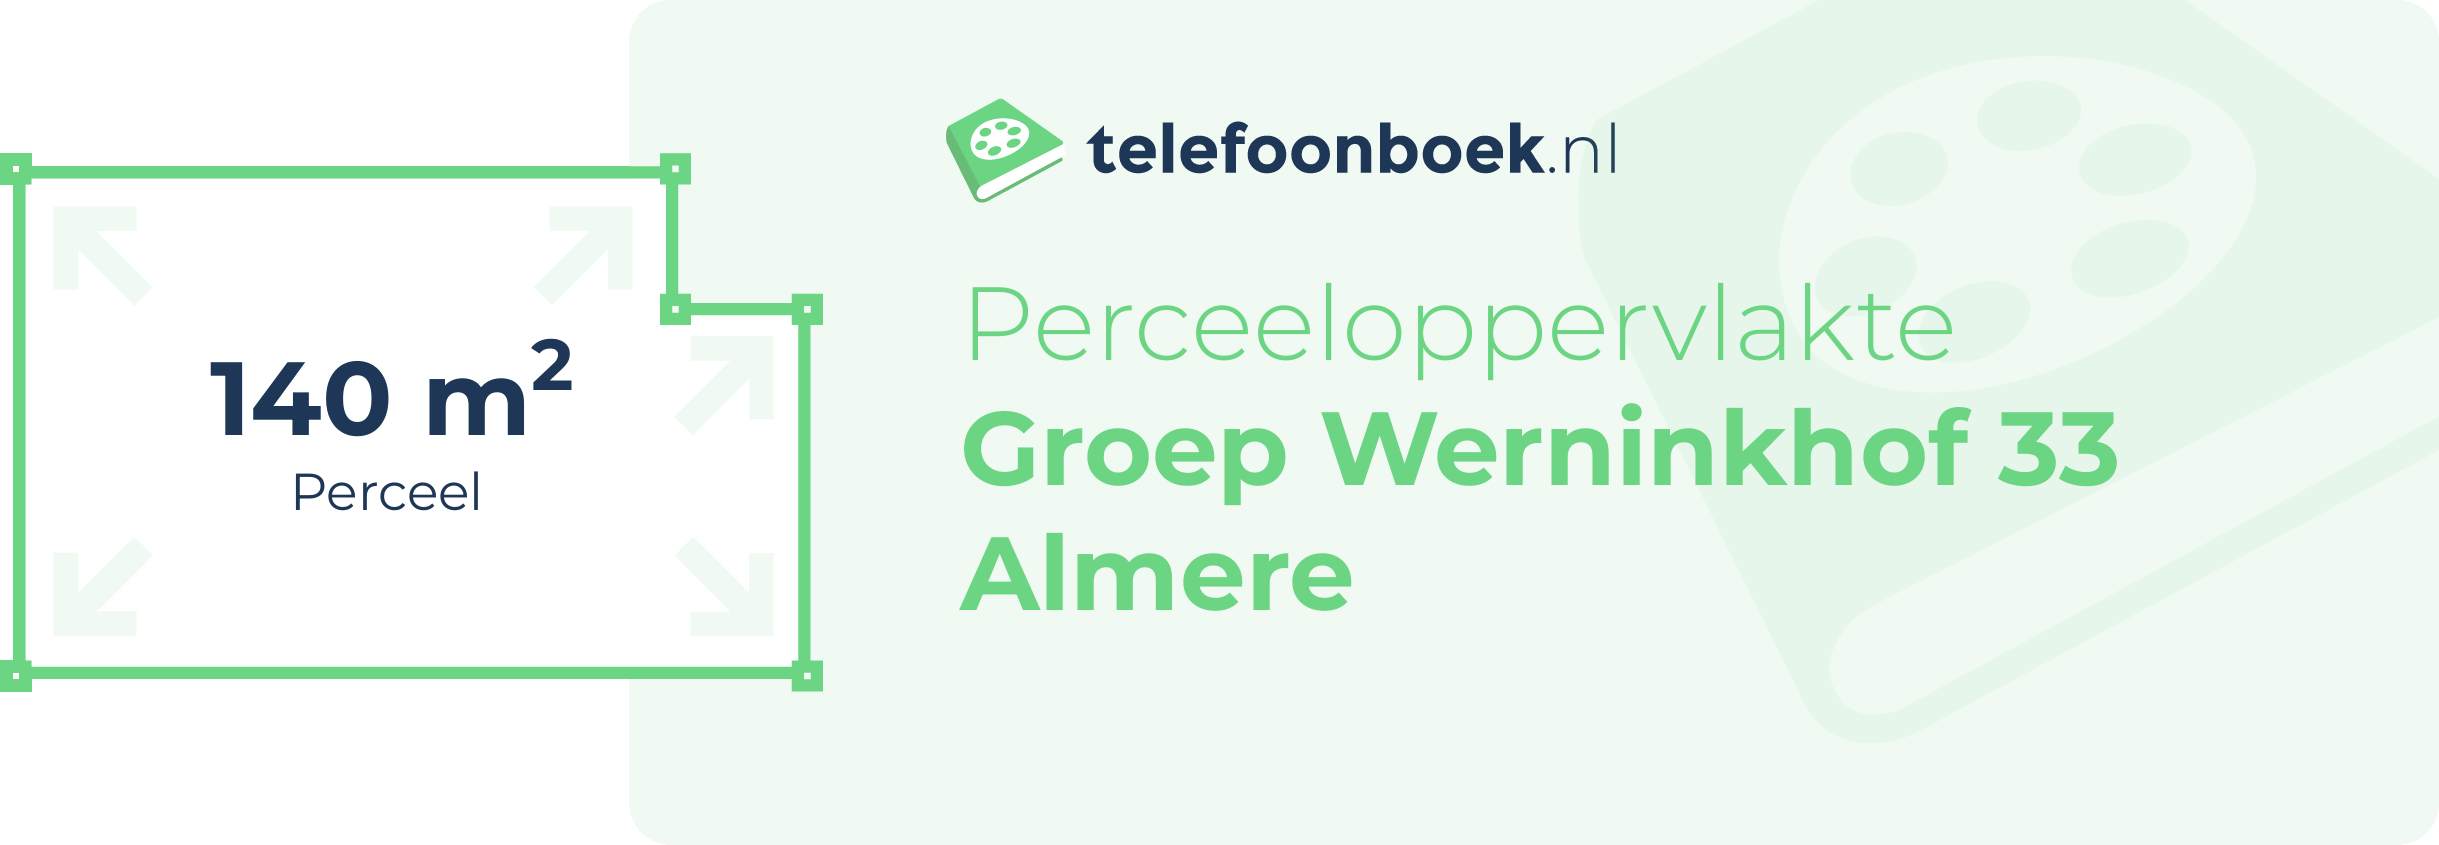 Perceeloppervlakte Groep Werninkhof 33 Almere